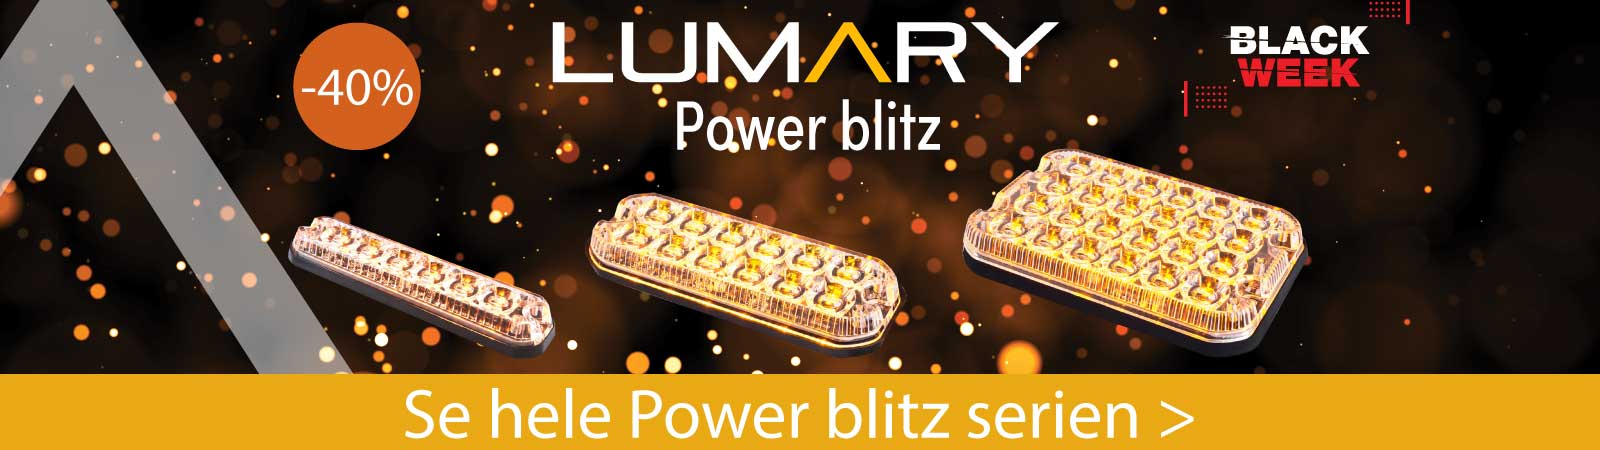 Lumary Power blitz varsellys serie